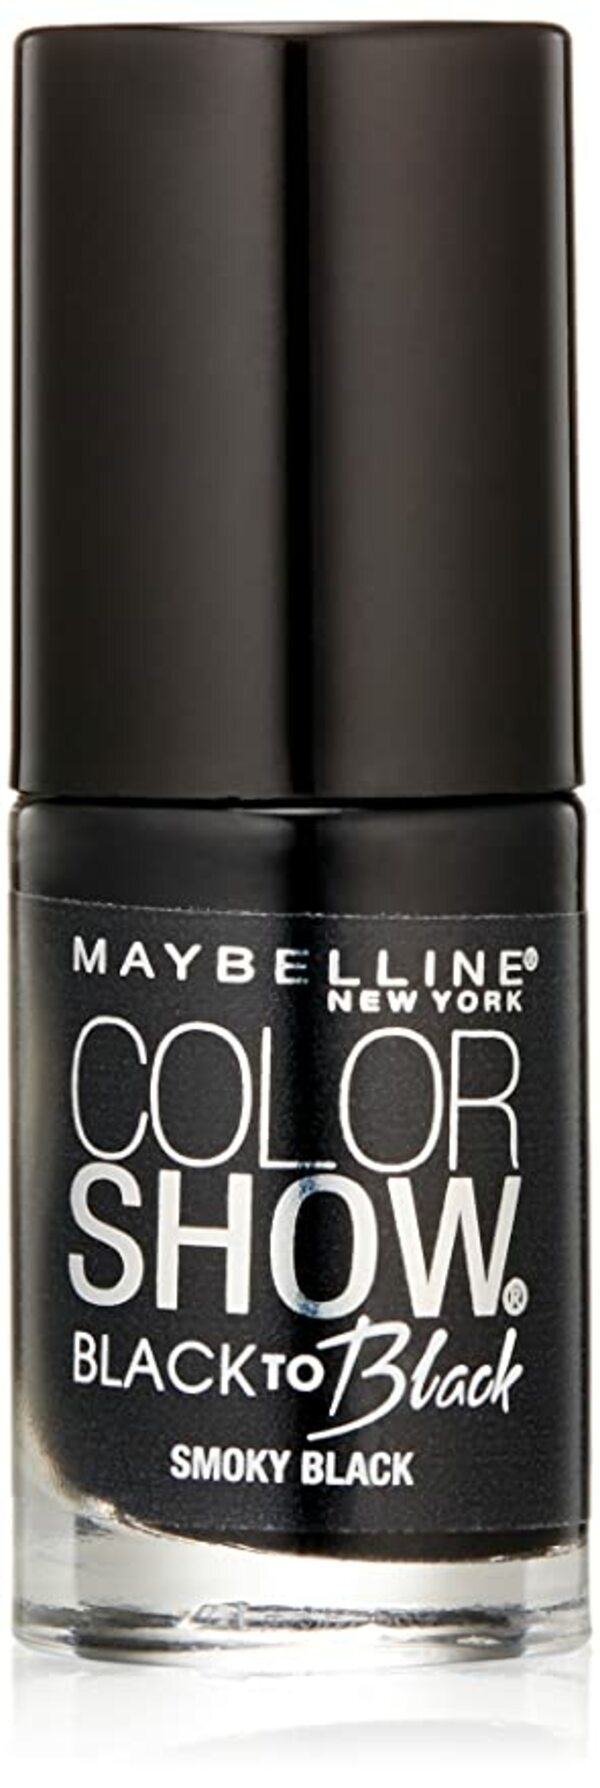 Nail polish swatch / manicure of shade Maybelline Smoky Black